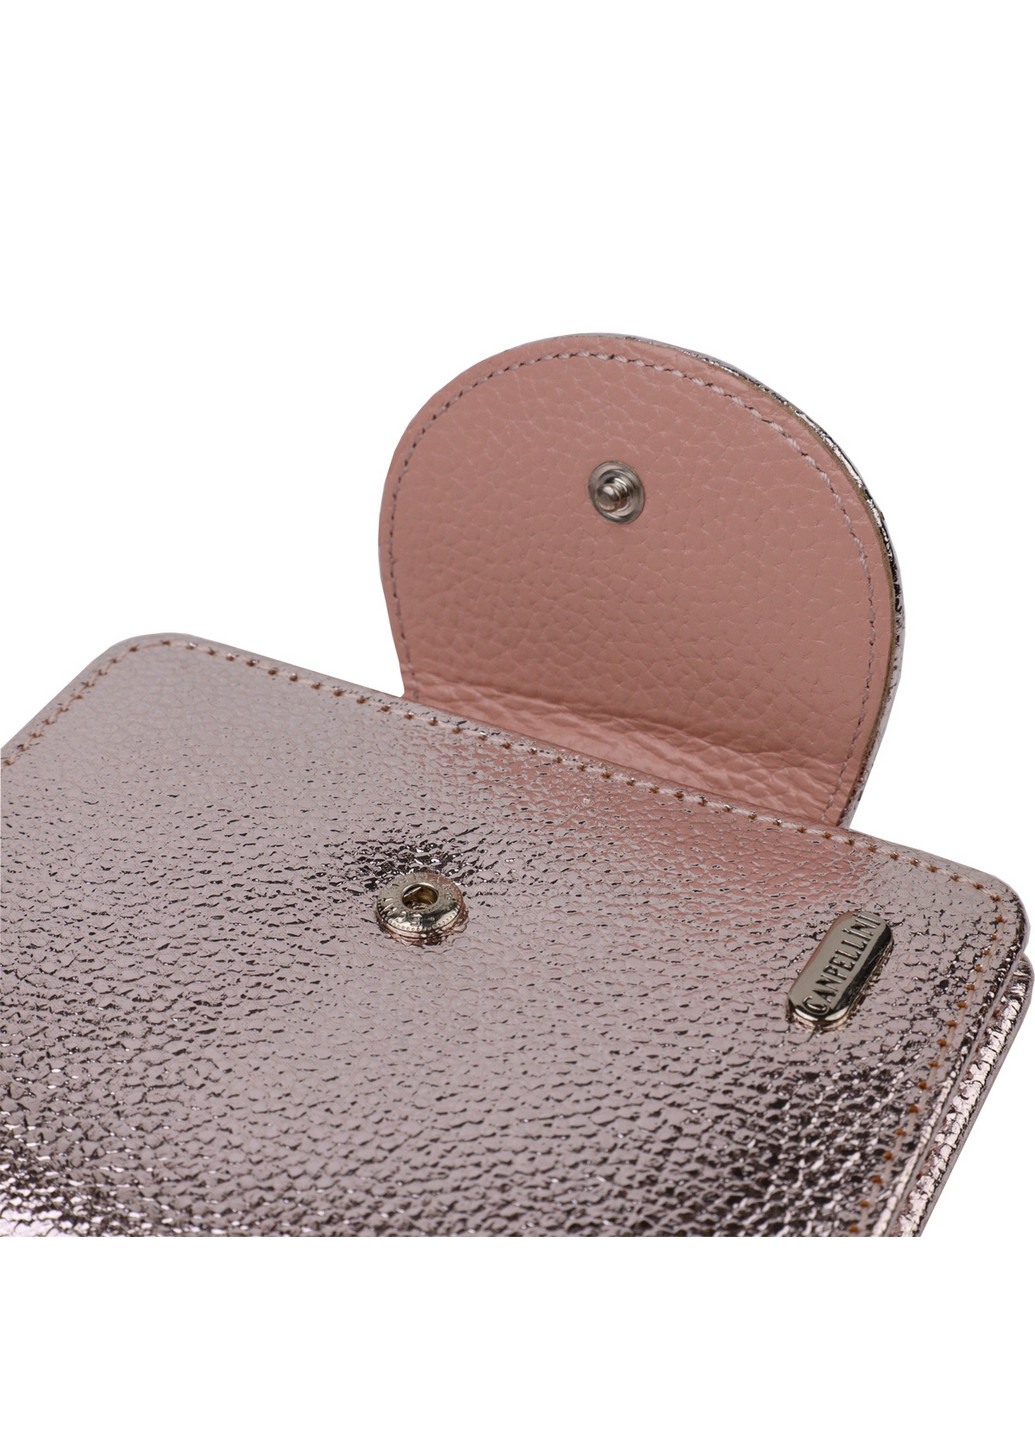 Кожаный кошелек женский 9х11,7х1 см Canpellini (259961868)